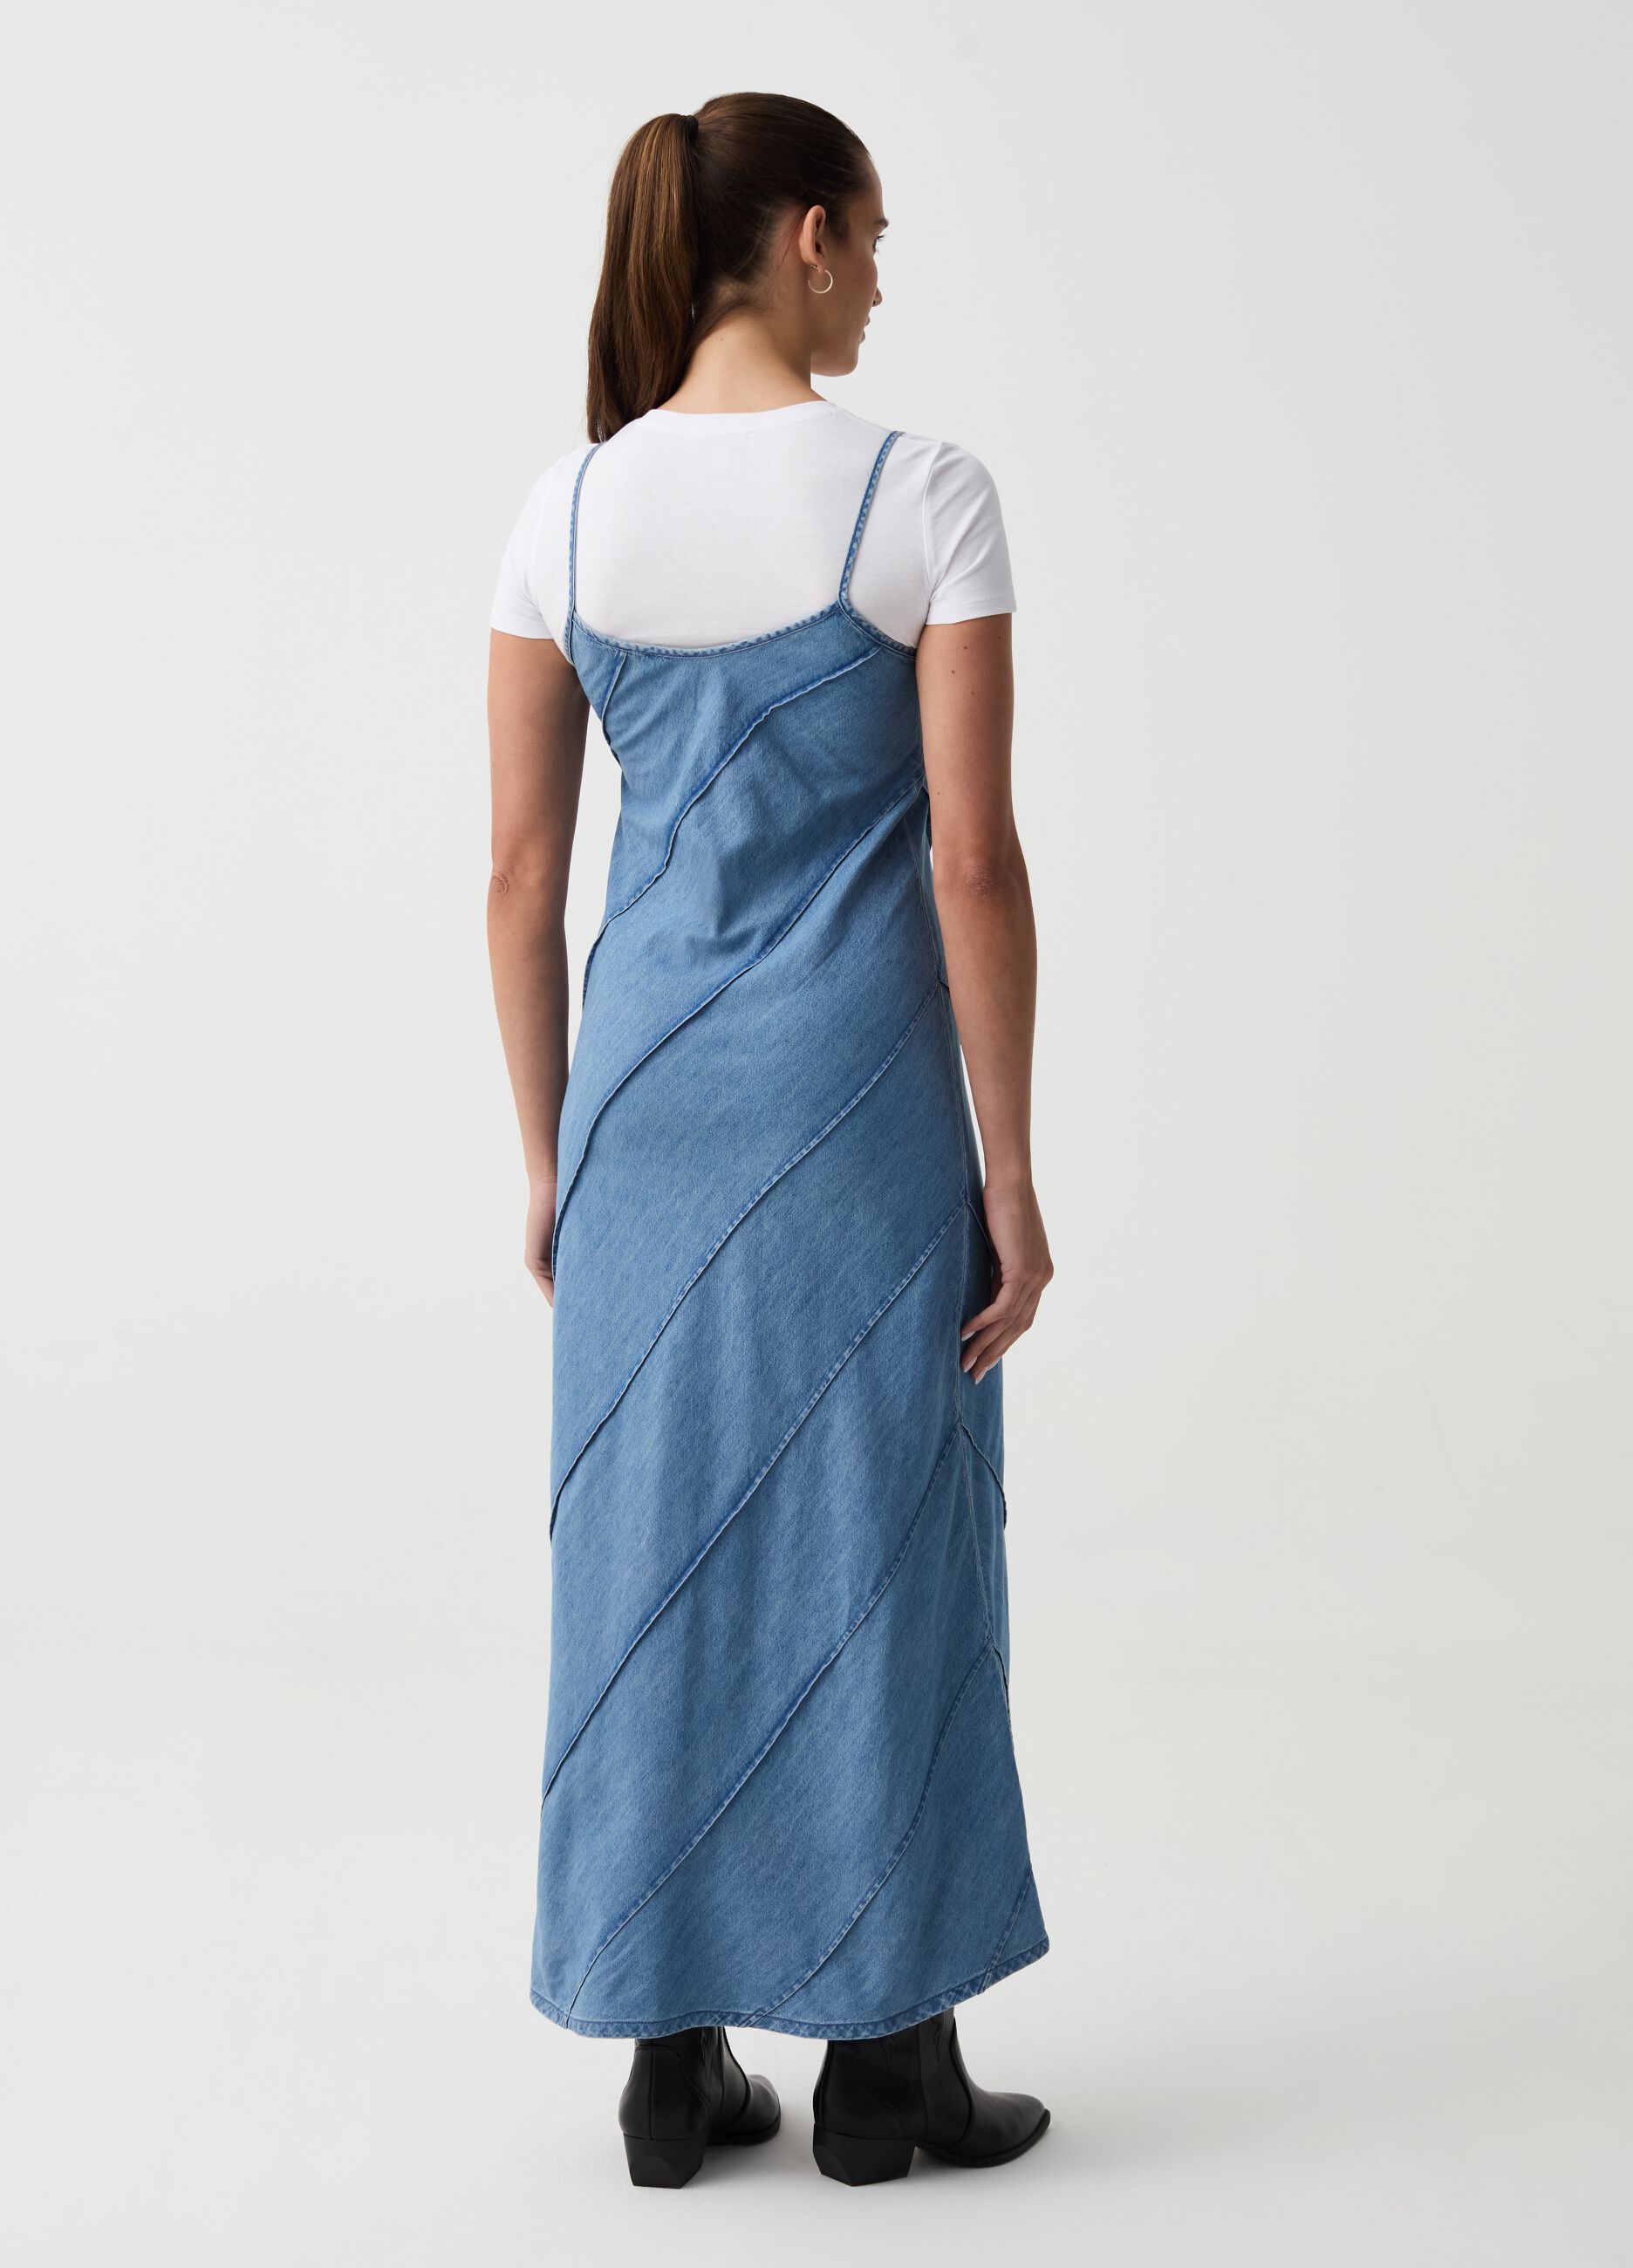 Long denim dress with raised stitching